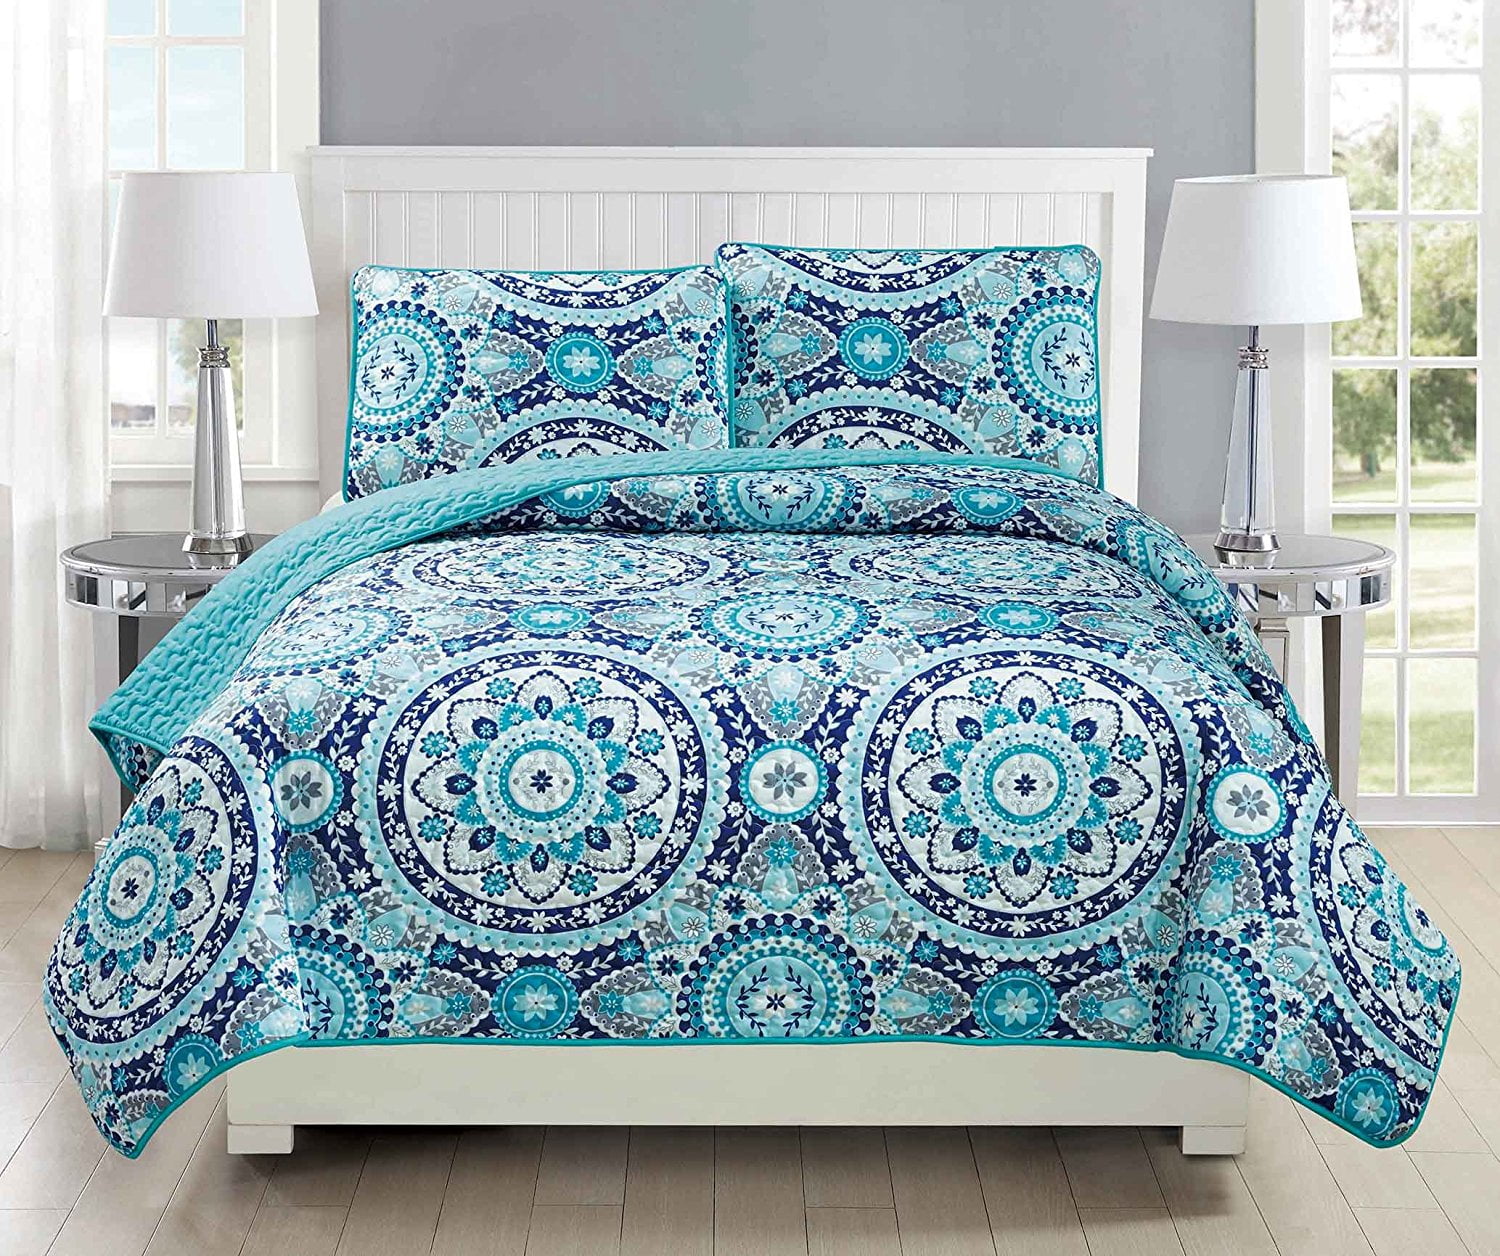 Fancy Linen Oversize Reversible Bedspread Floral Navy Blue Black All Sizes New 